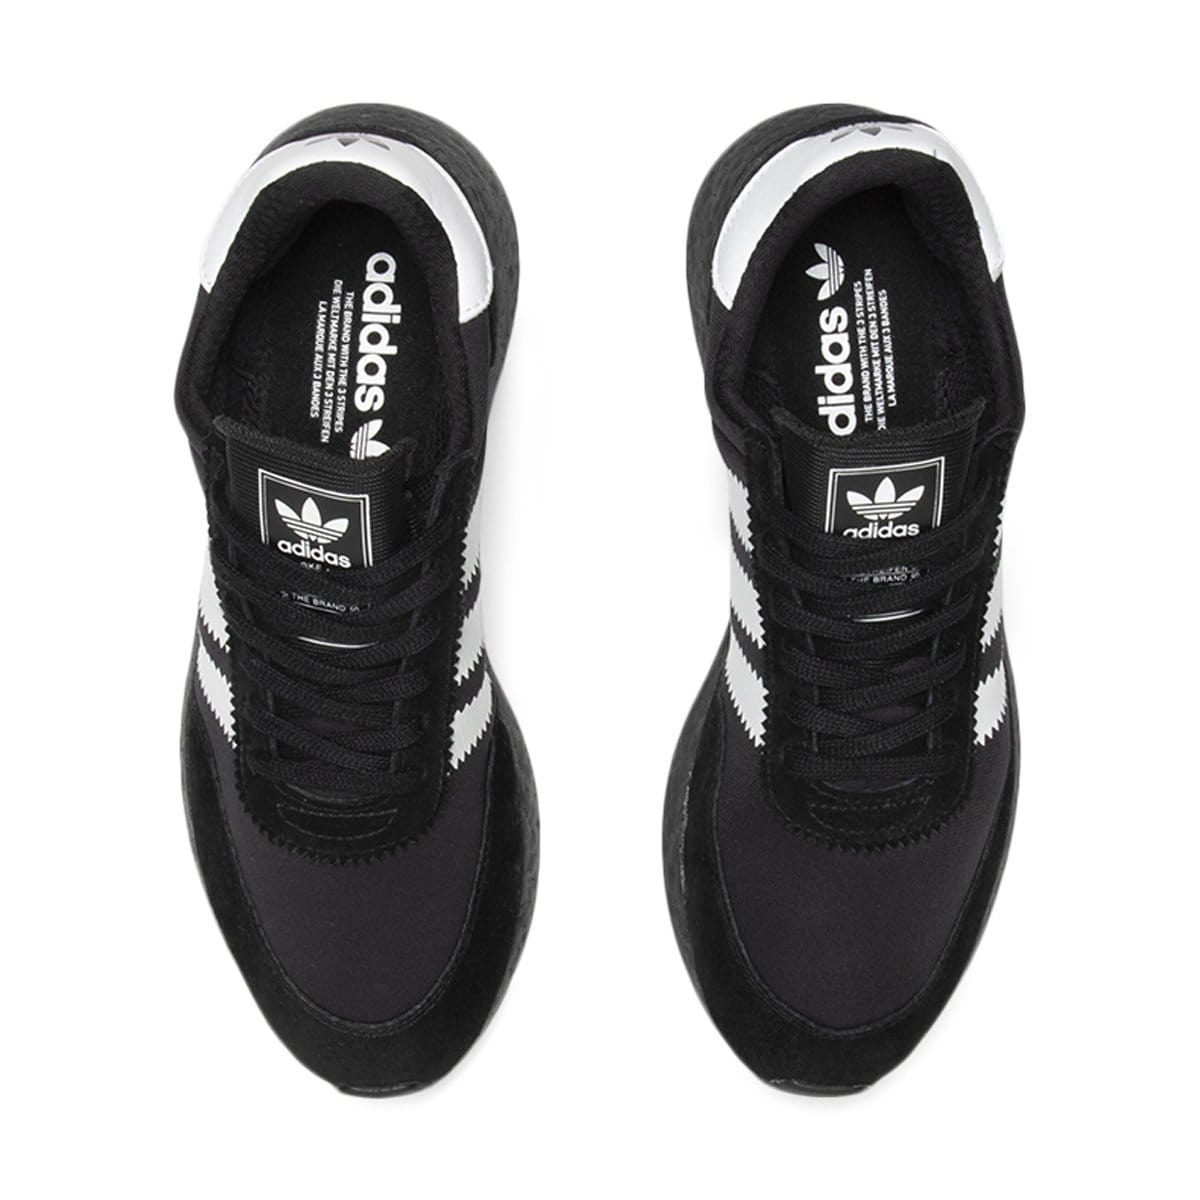 adidas Shoes CBLACK,FTWWHT,COPPMT / 8 INIKI RUNNER